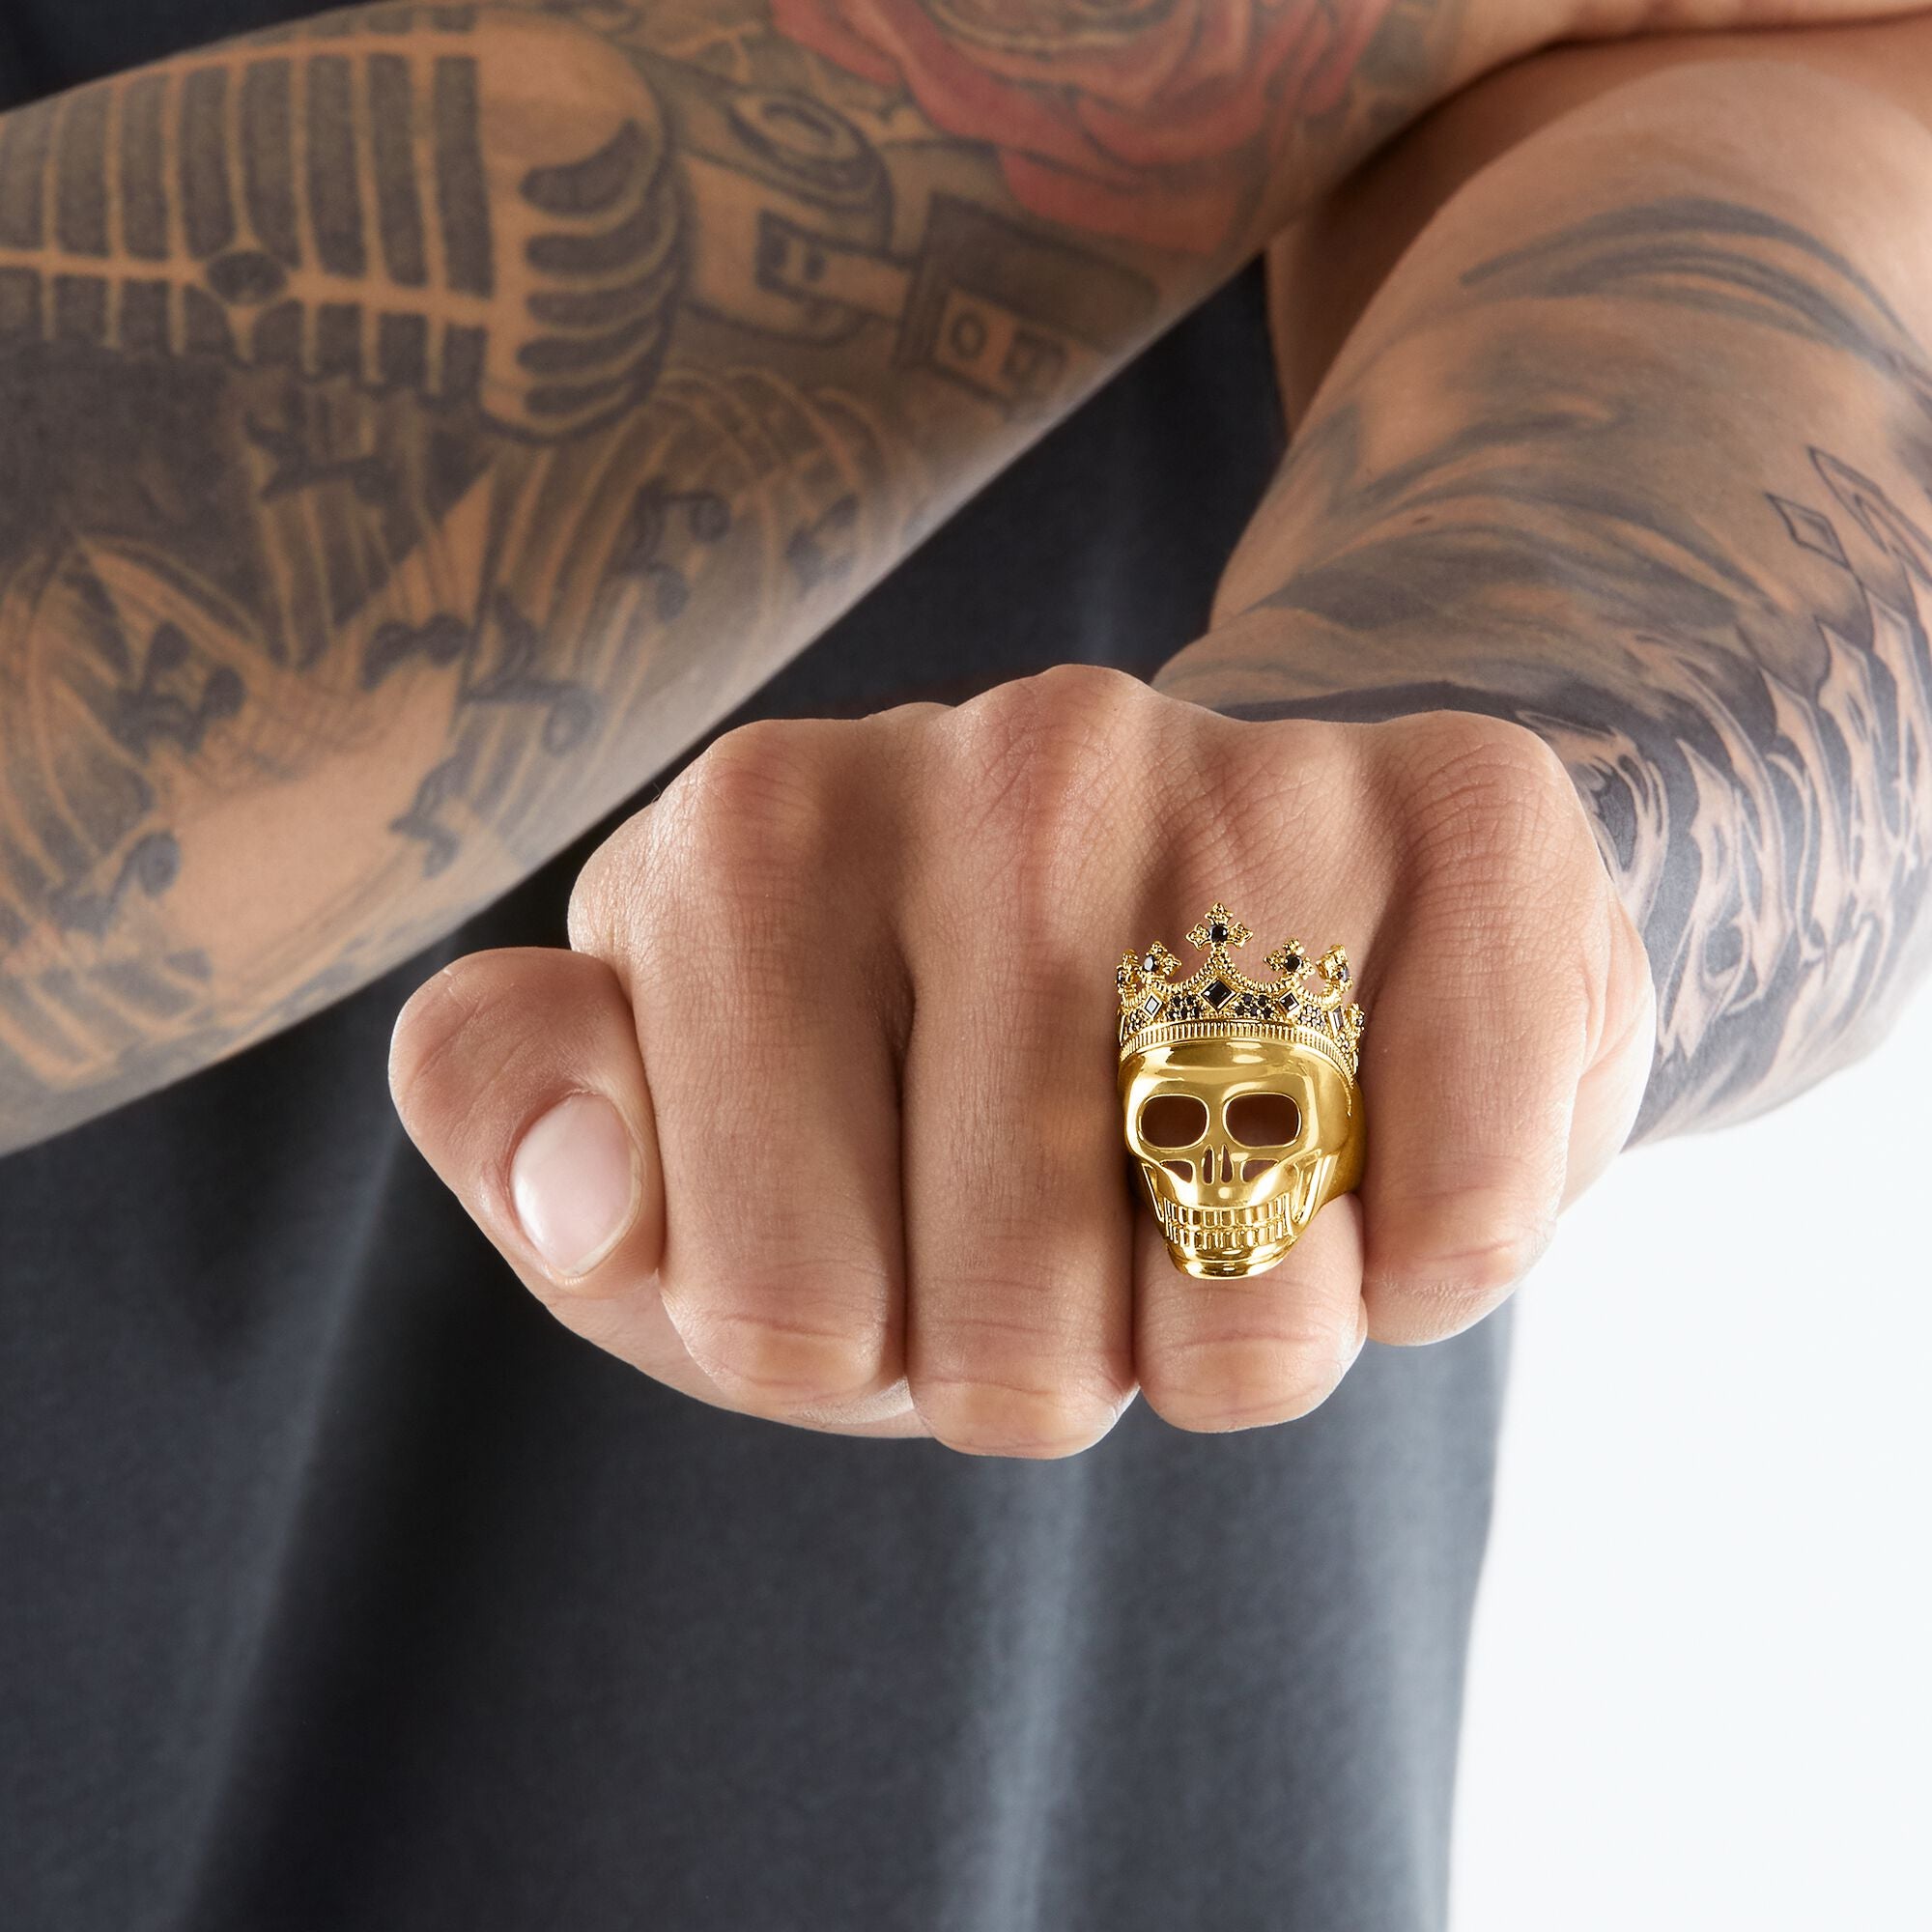 Thomas Sabo 18k Gold Plated Skull King Ring on  a man's hand